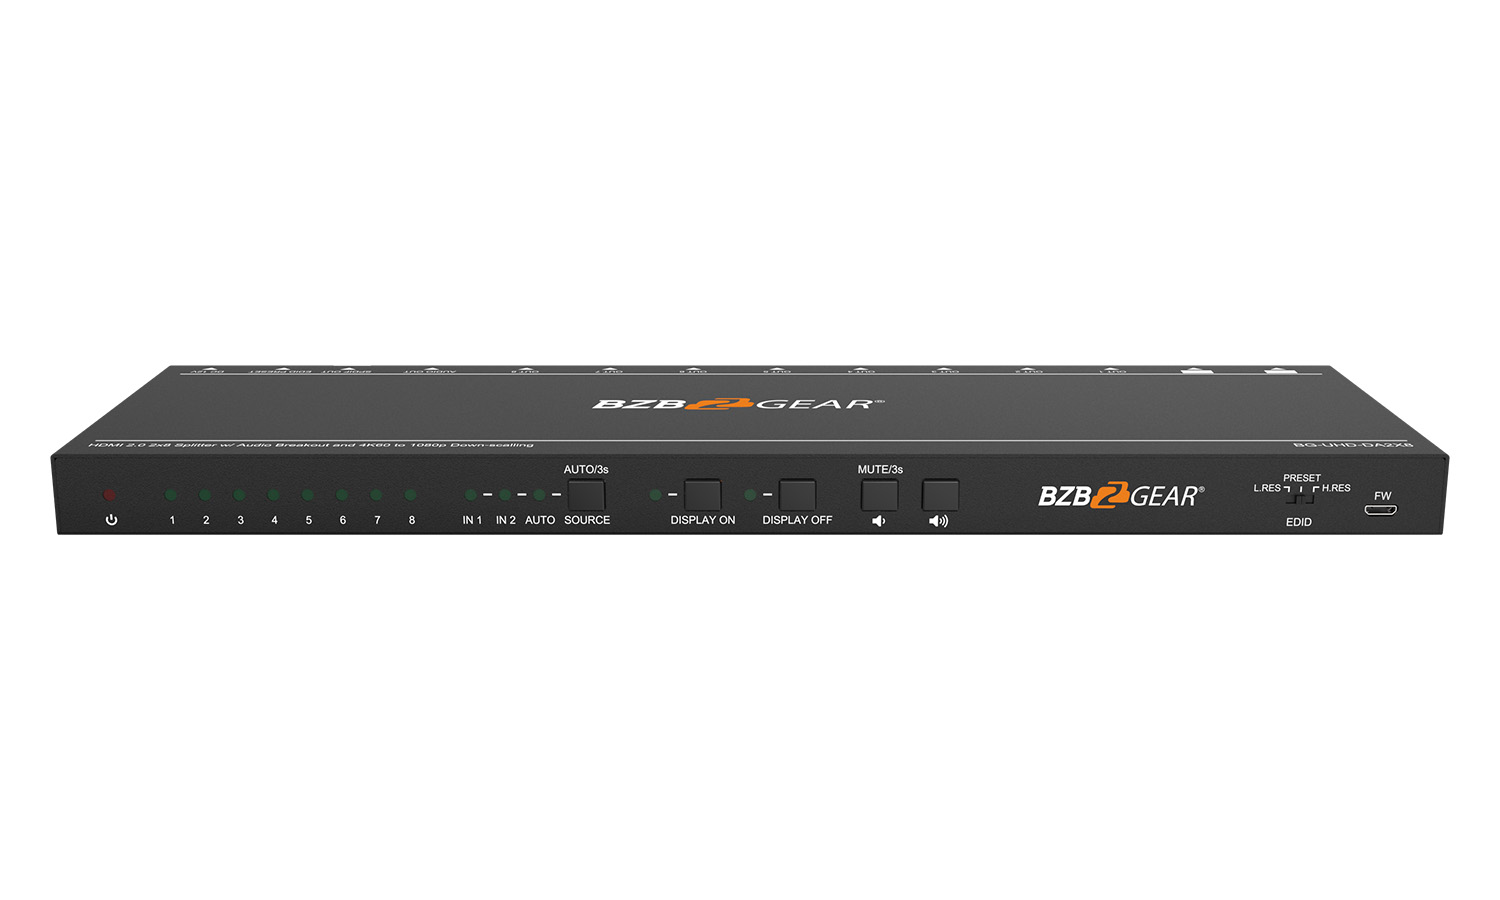 BG-UHD-DA2X8 2x8 4K UHD HDMI Splitter/Distribution Amplifier with CEC Turn On/Off TV by BZBGEAR